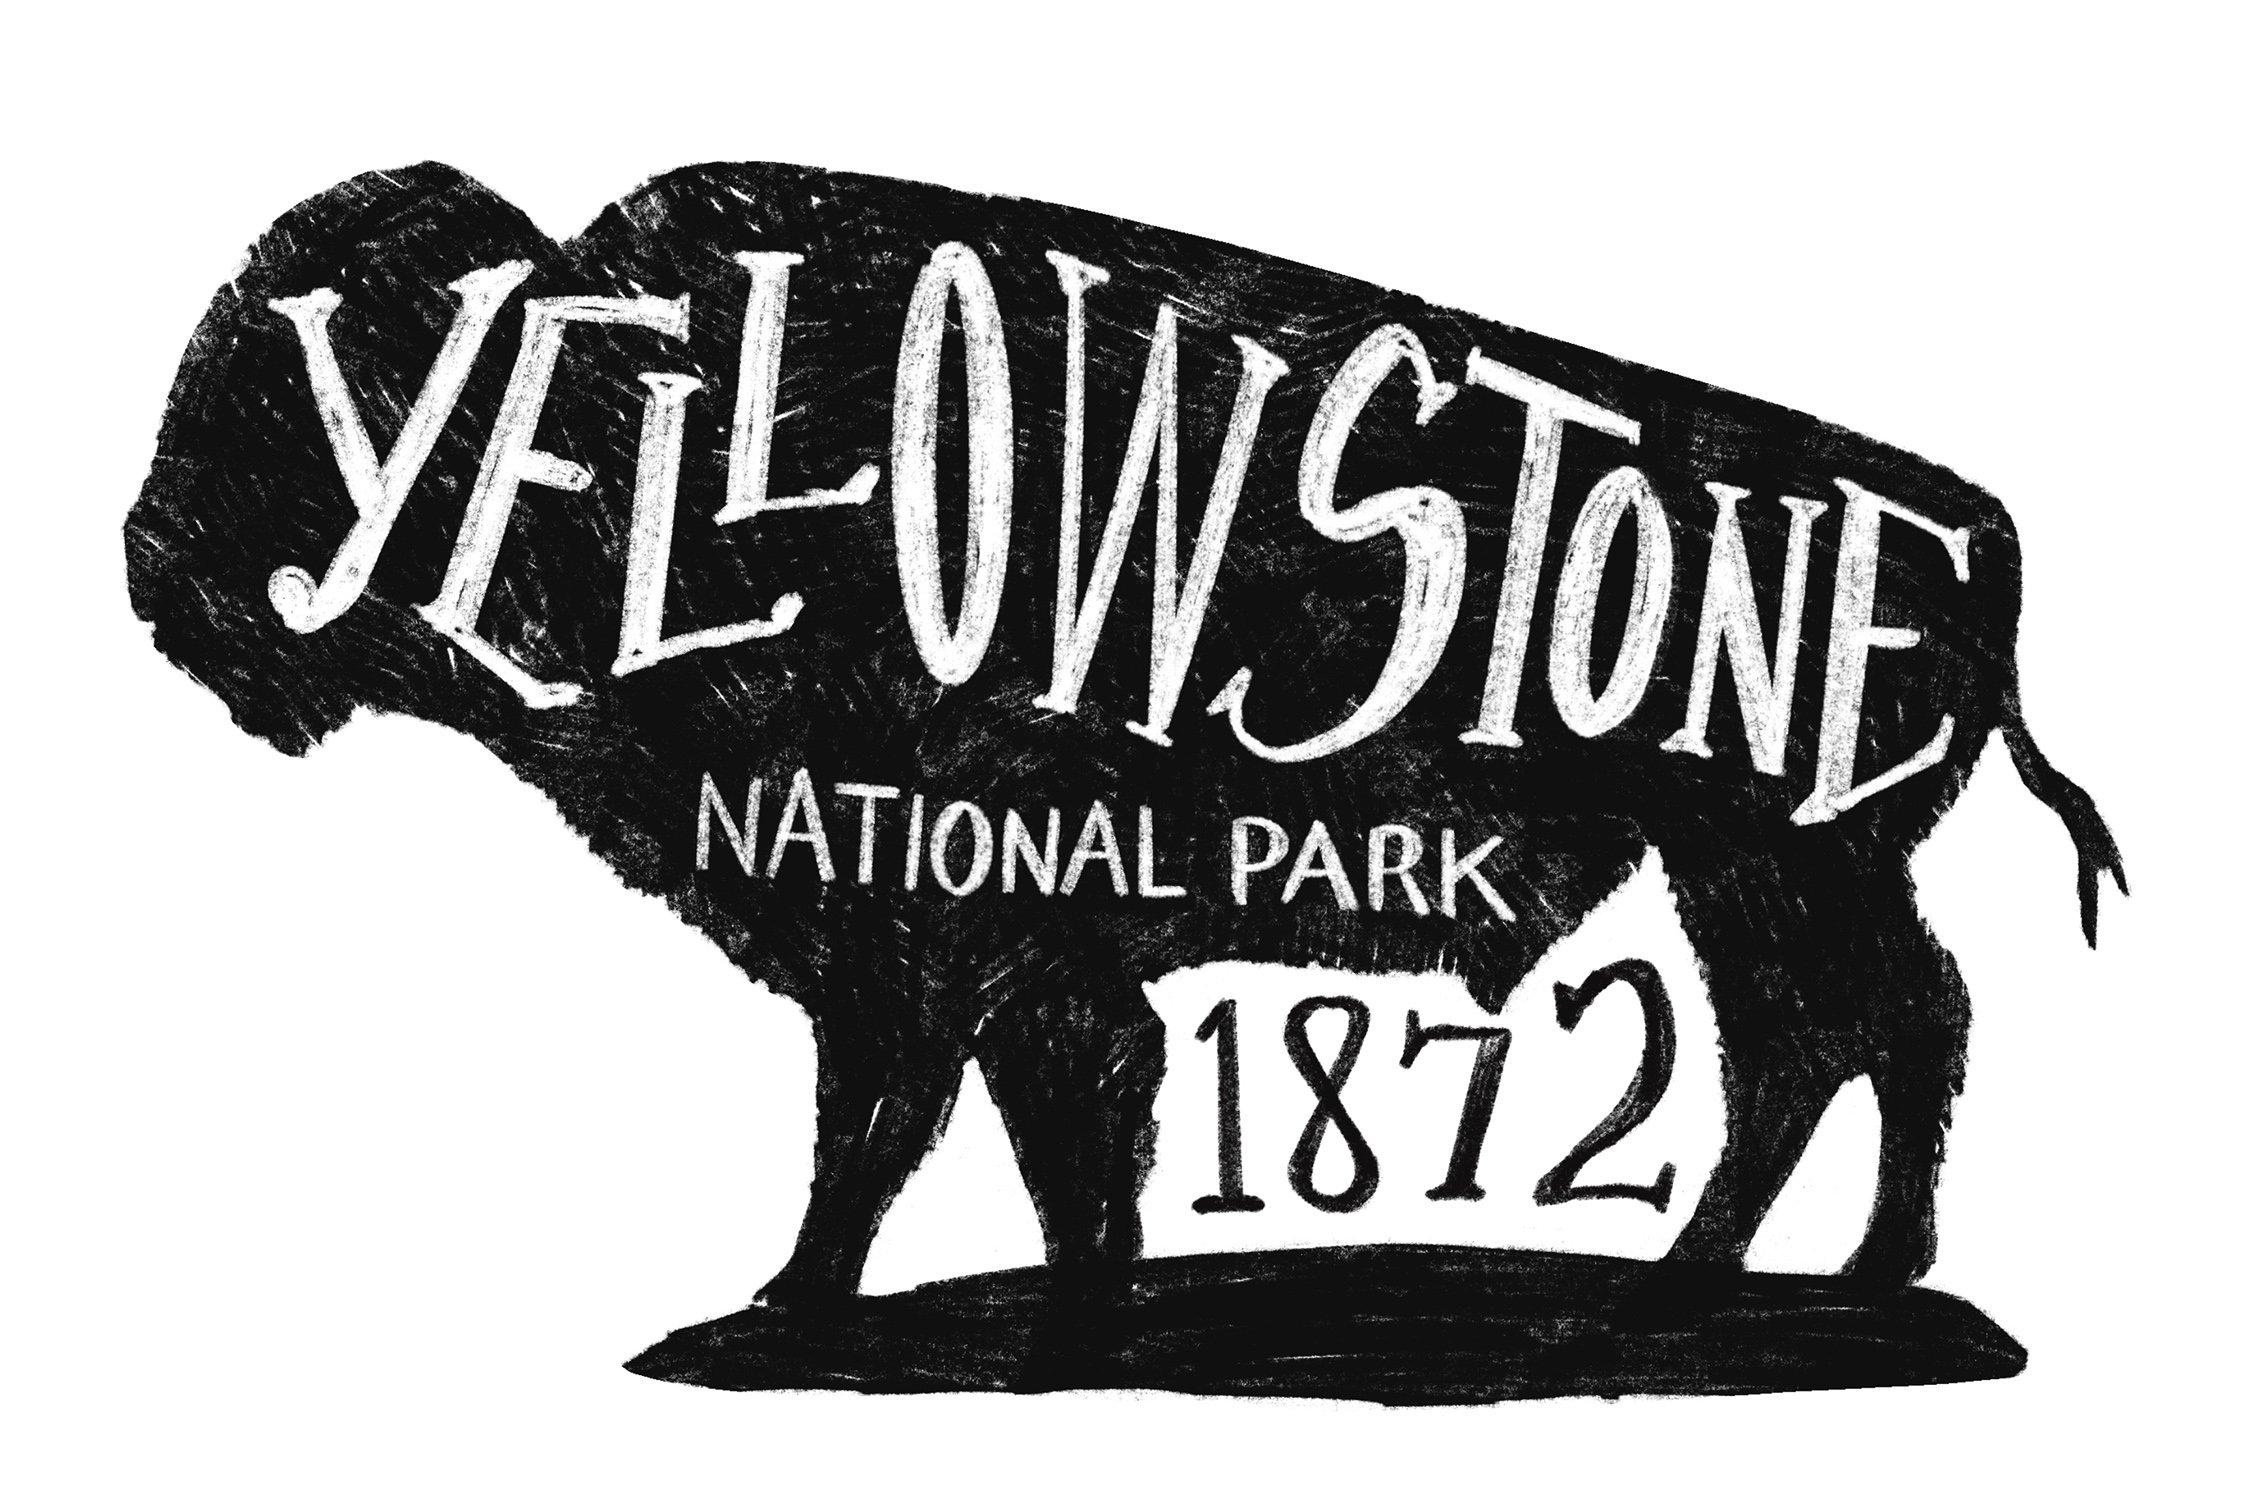 Yellowstone National Park Buffalo cover image.